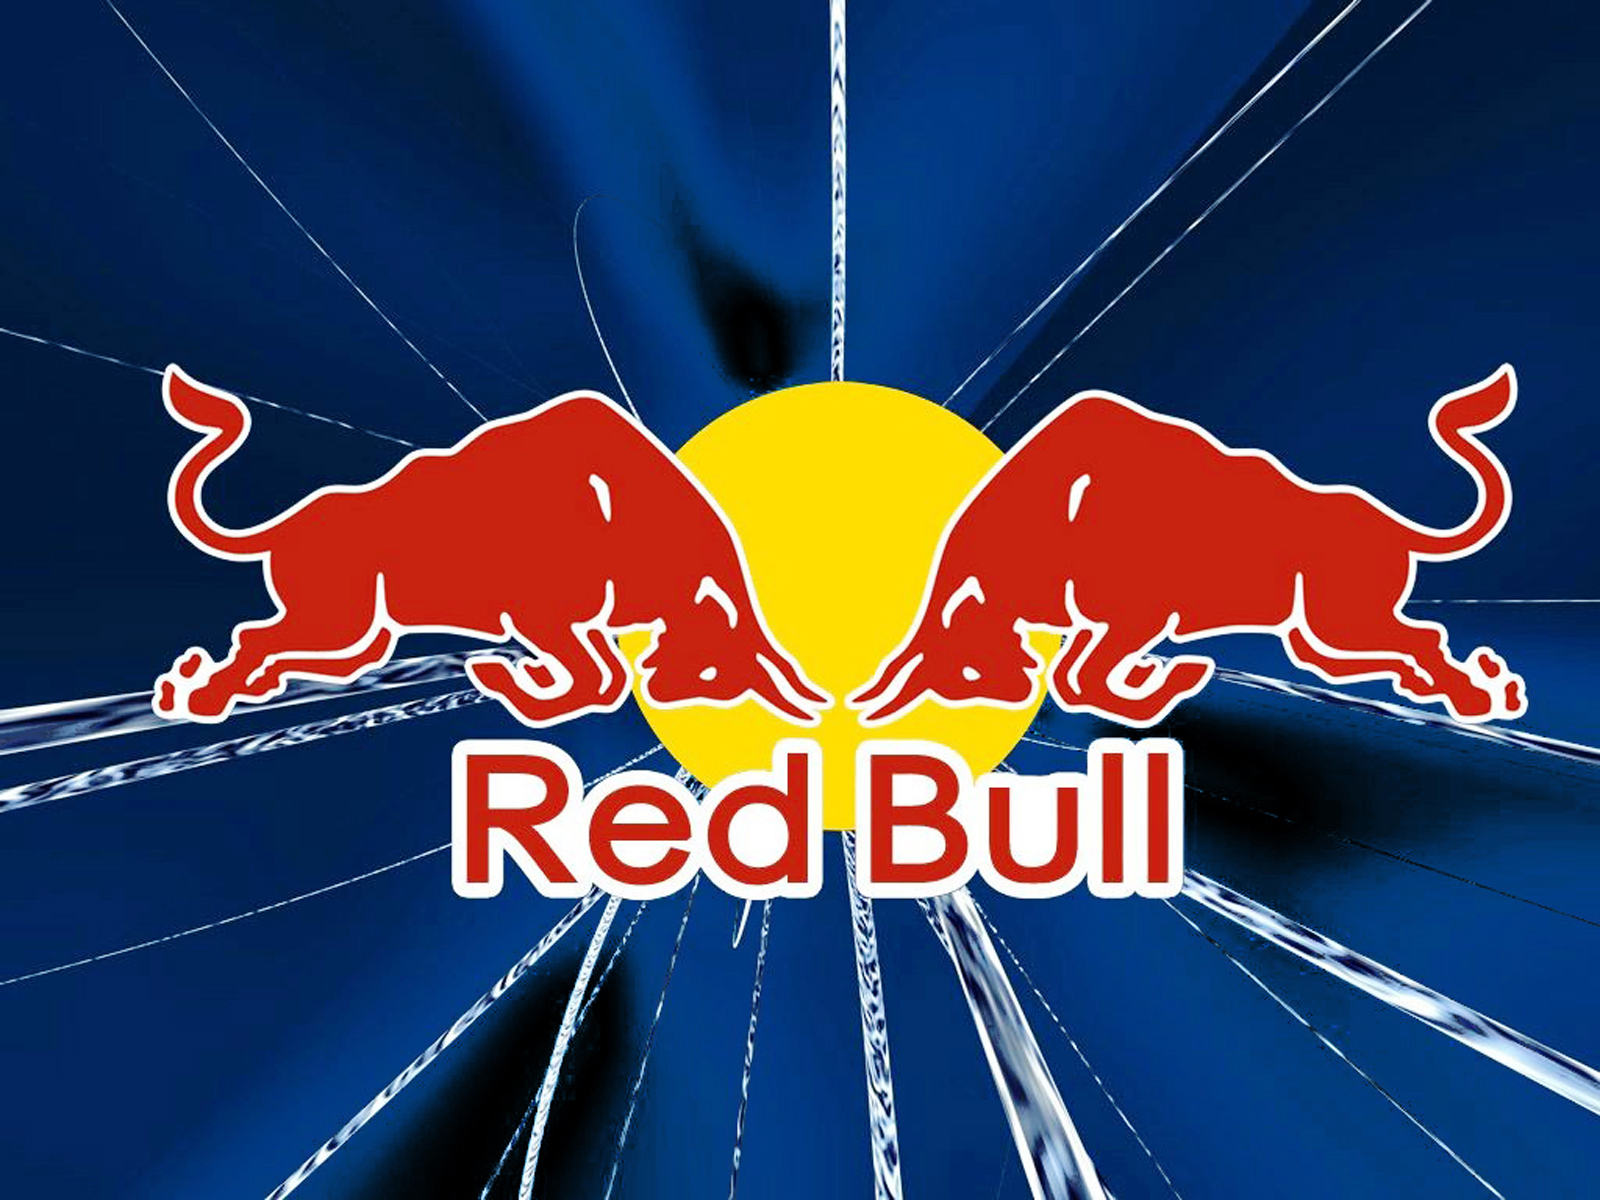 red bull wallpaper hd,red bull,logo,font,graphics,graphic design